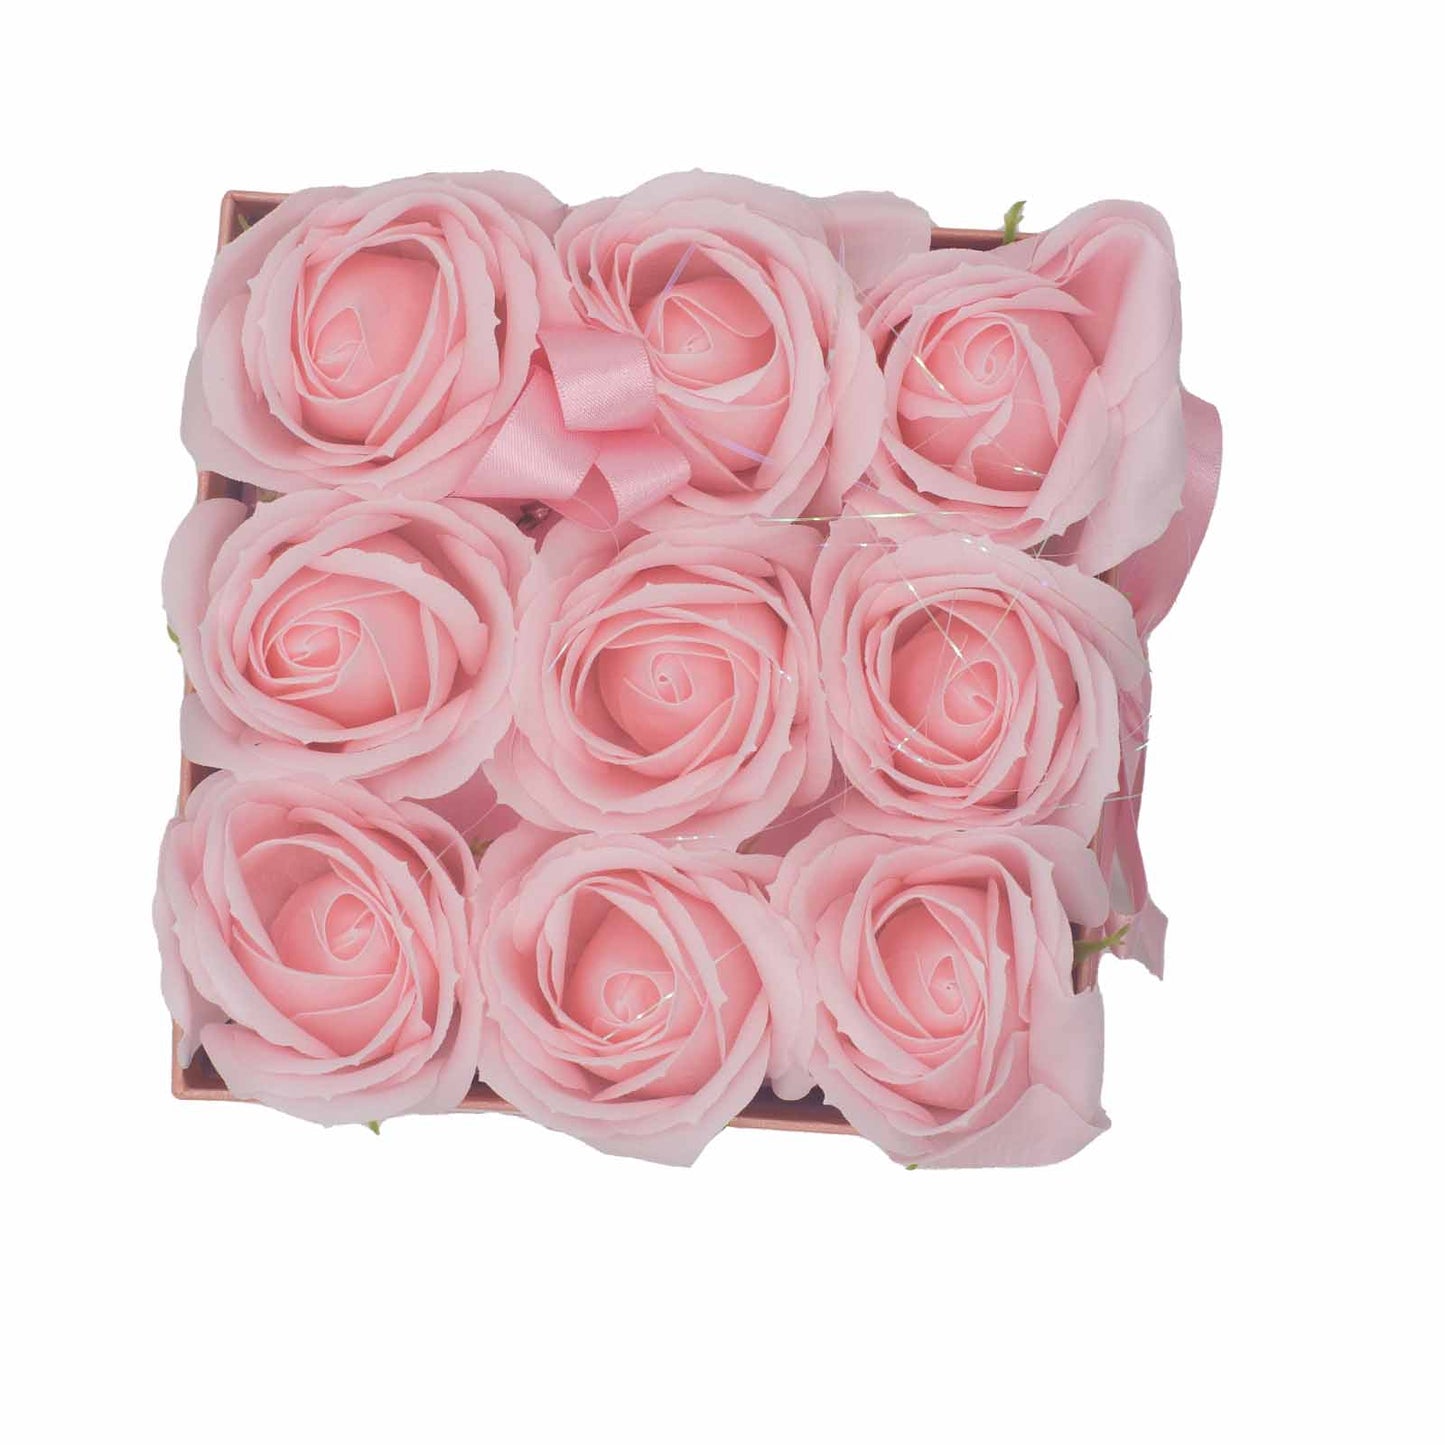 Rose Blossom Soap Bouquet - Premium  - Shop now at San Rocco Italia